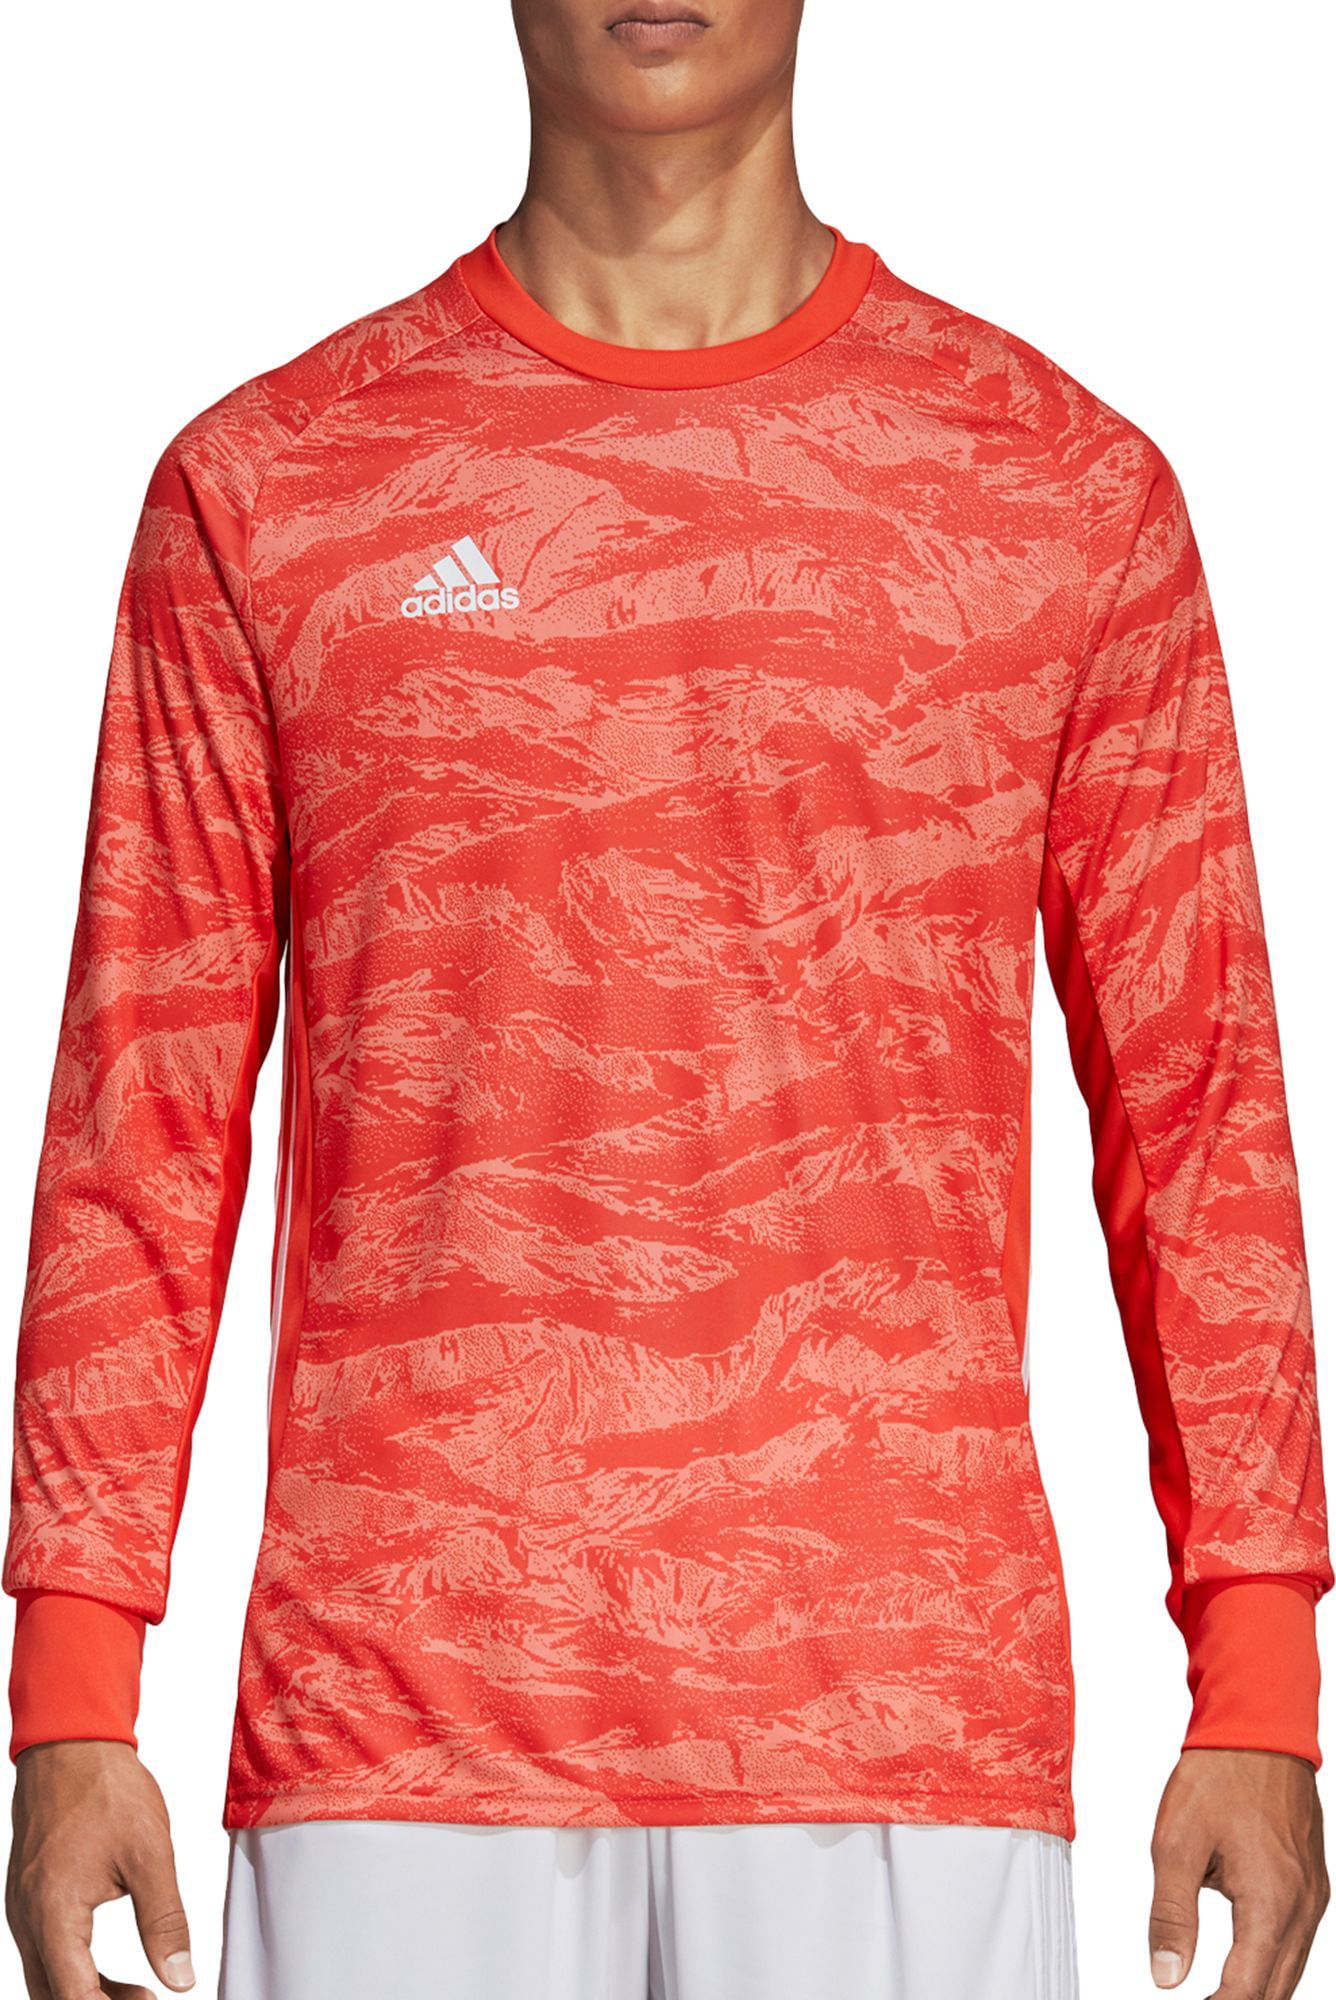 adidas adipro 18 long sleeve goalkeeper jersey